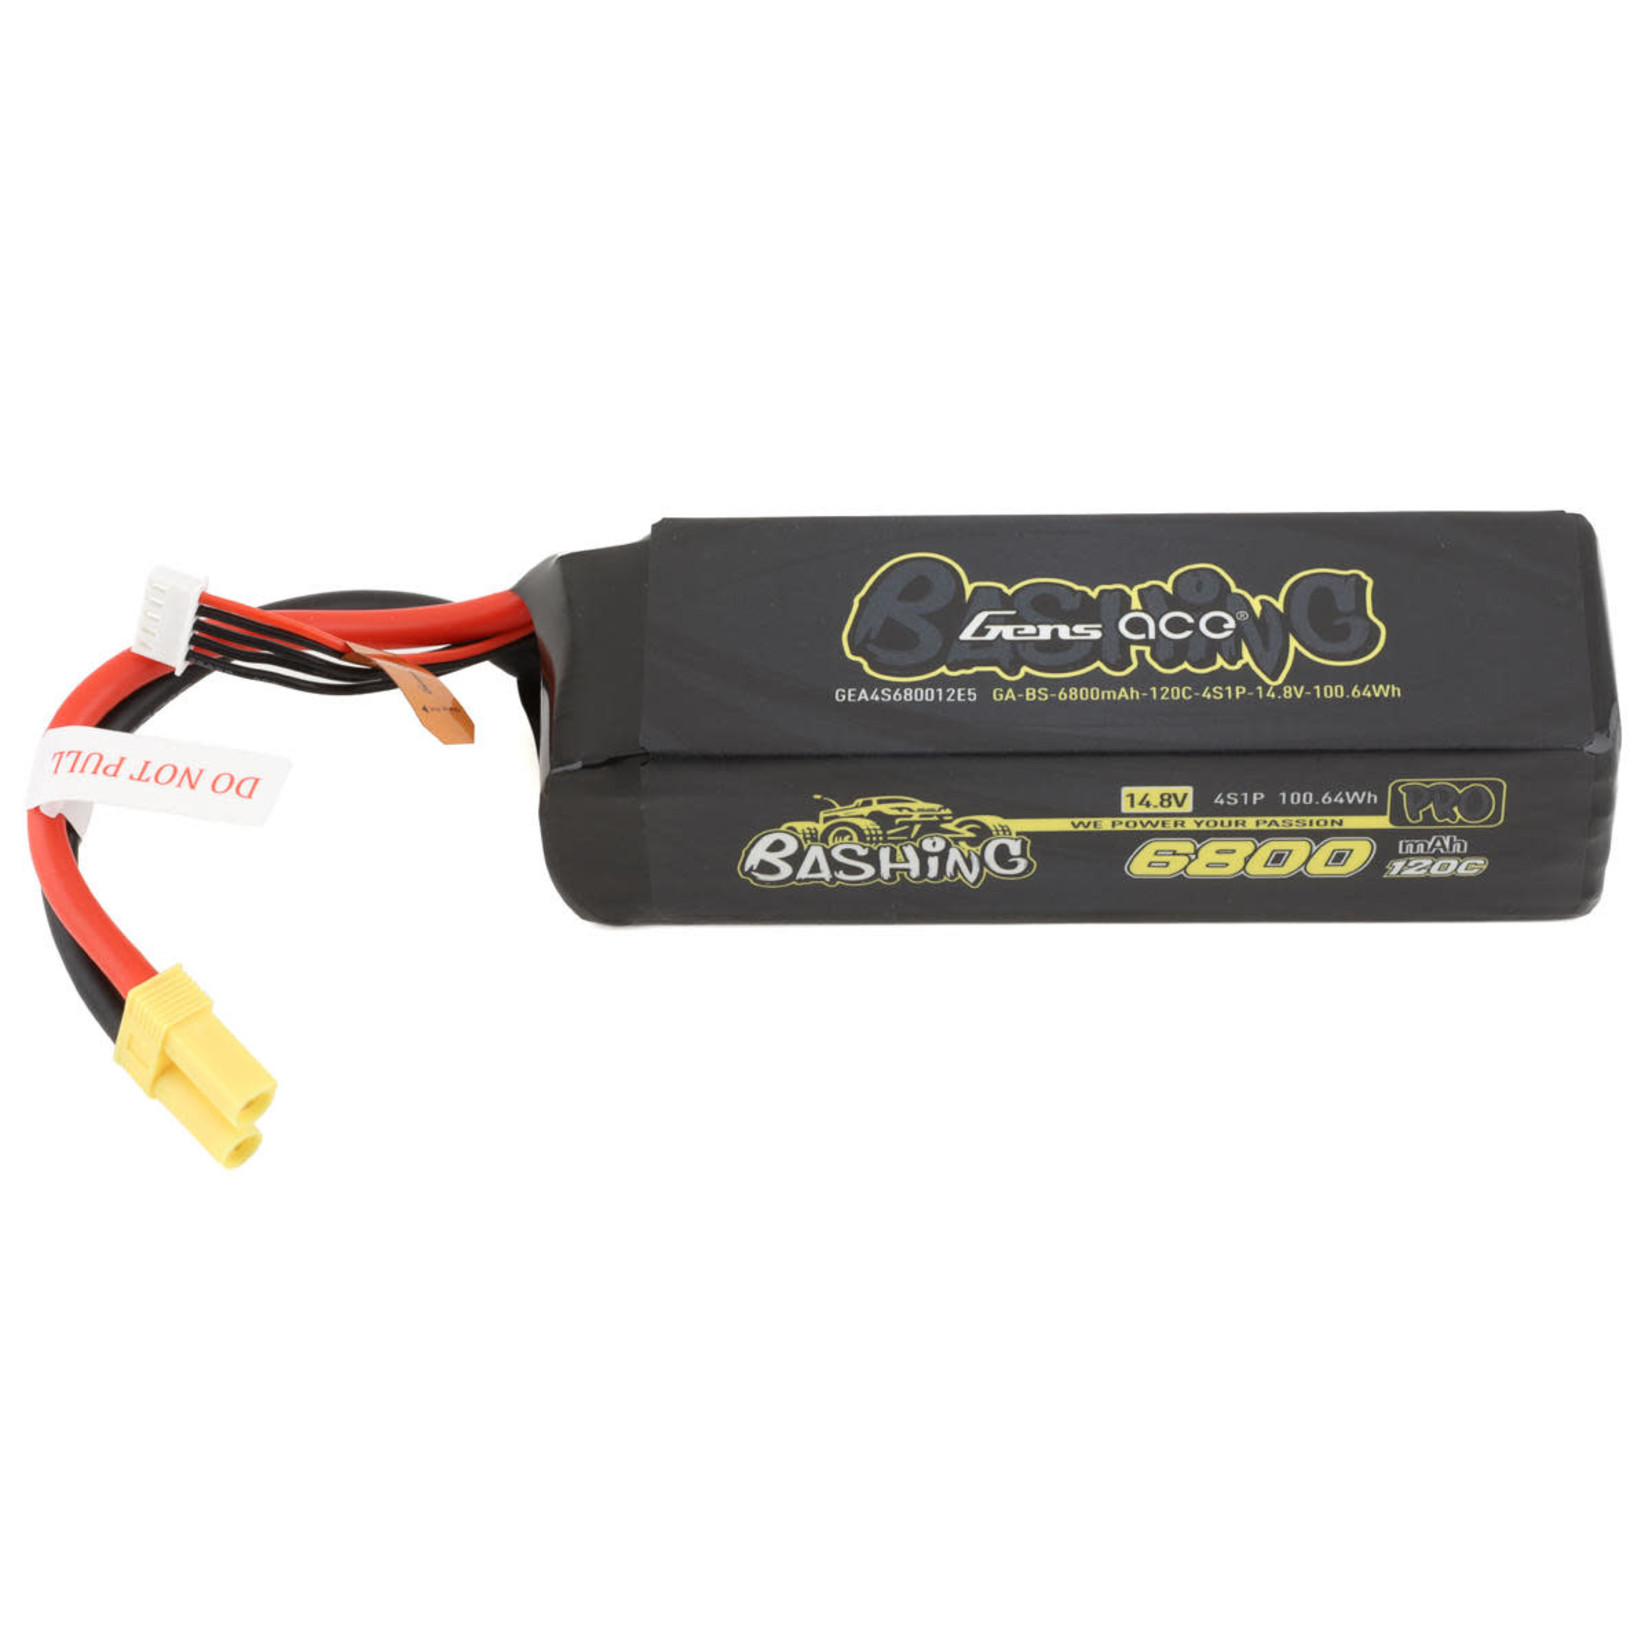 Gens Ace Gens Ace 4S Bashing Pro LiPo Battery Pack 120C (14.8V/6800mAh) w/EC5 Connector #GEA4S680012E5